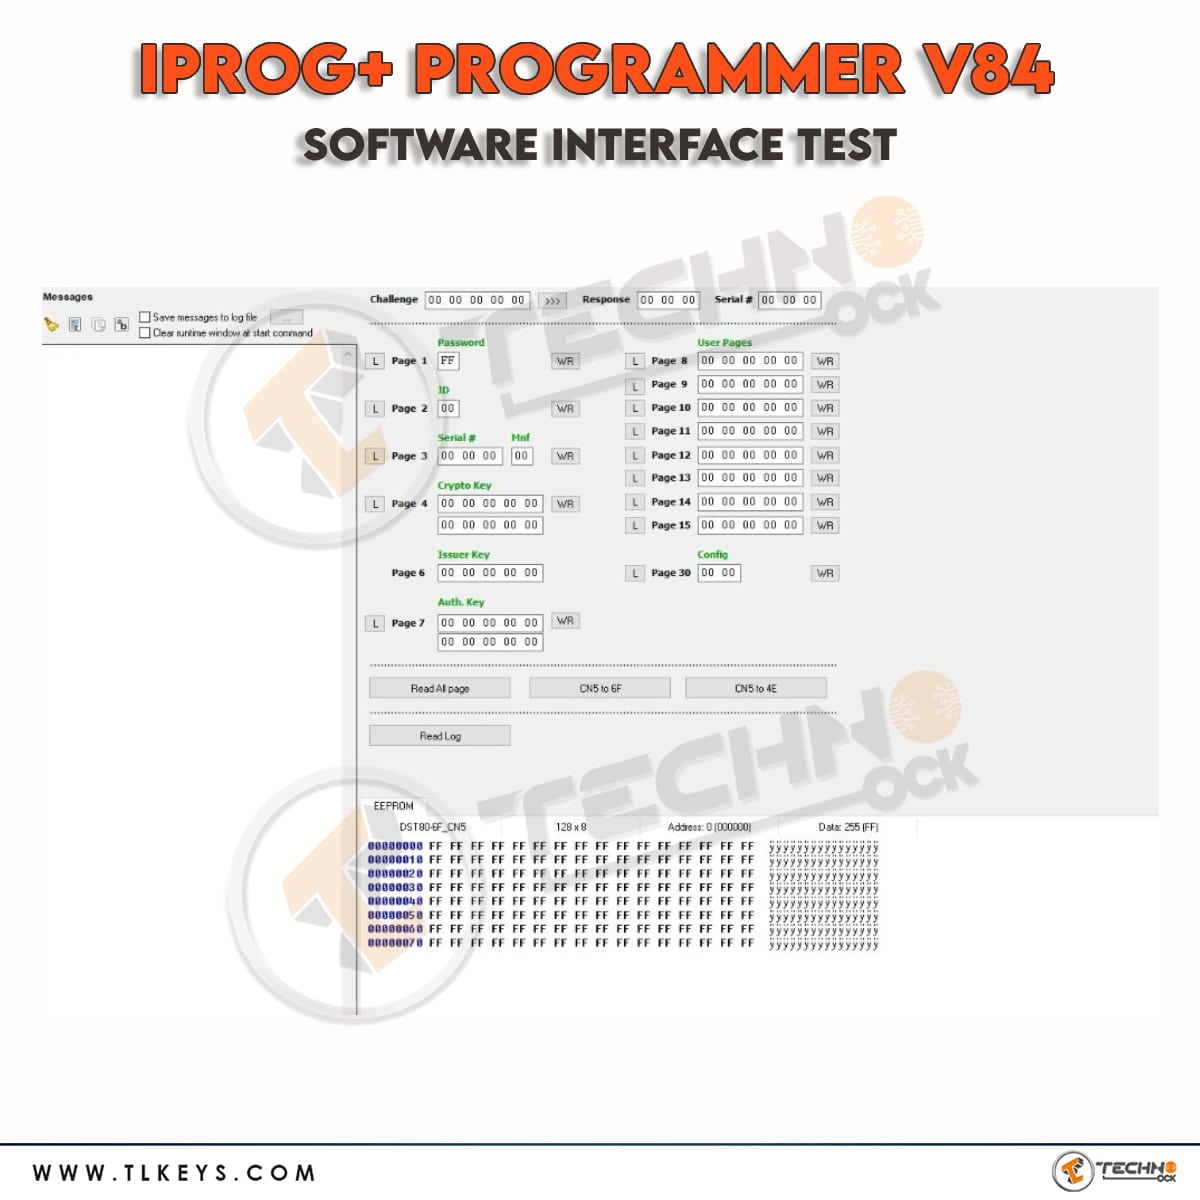 IPROG+ Software Interface Test